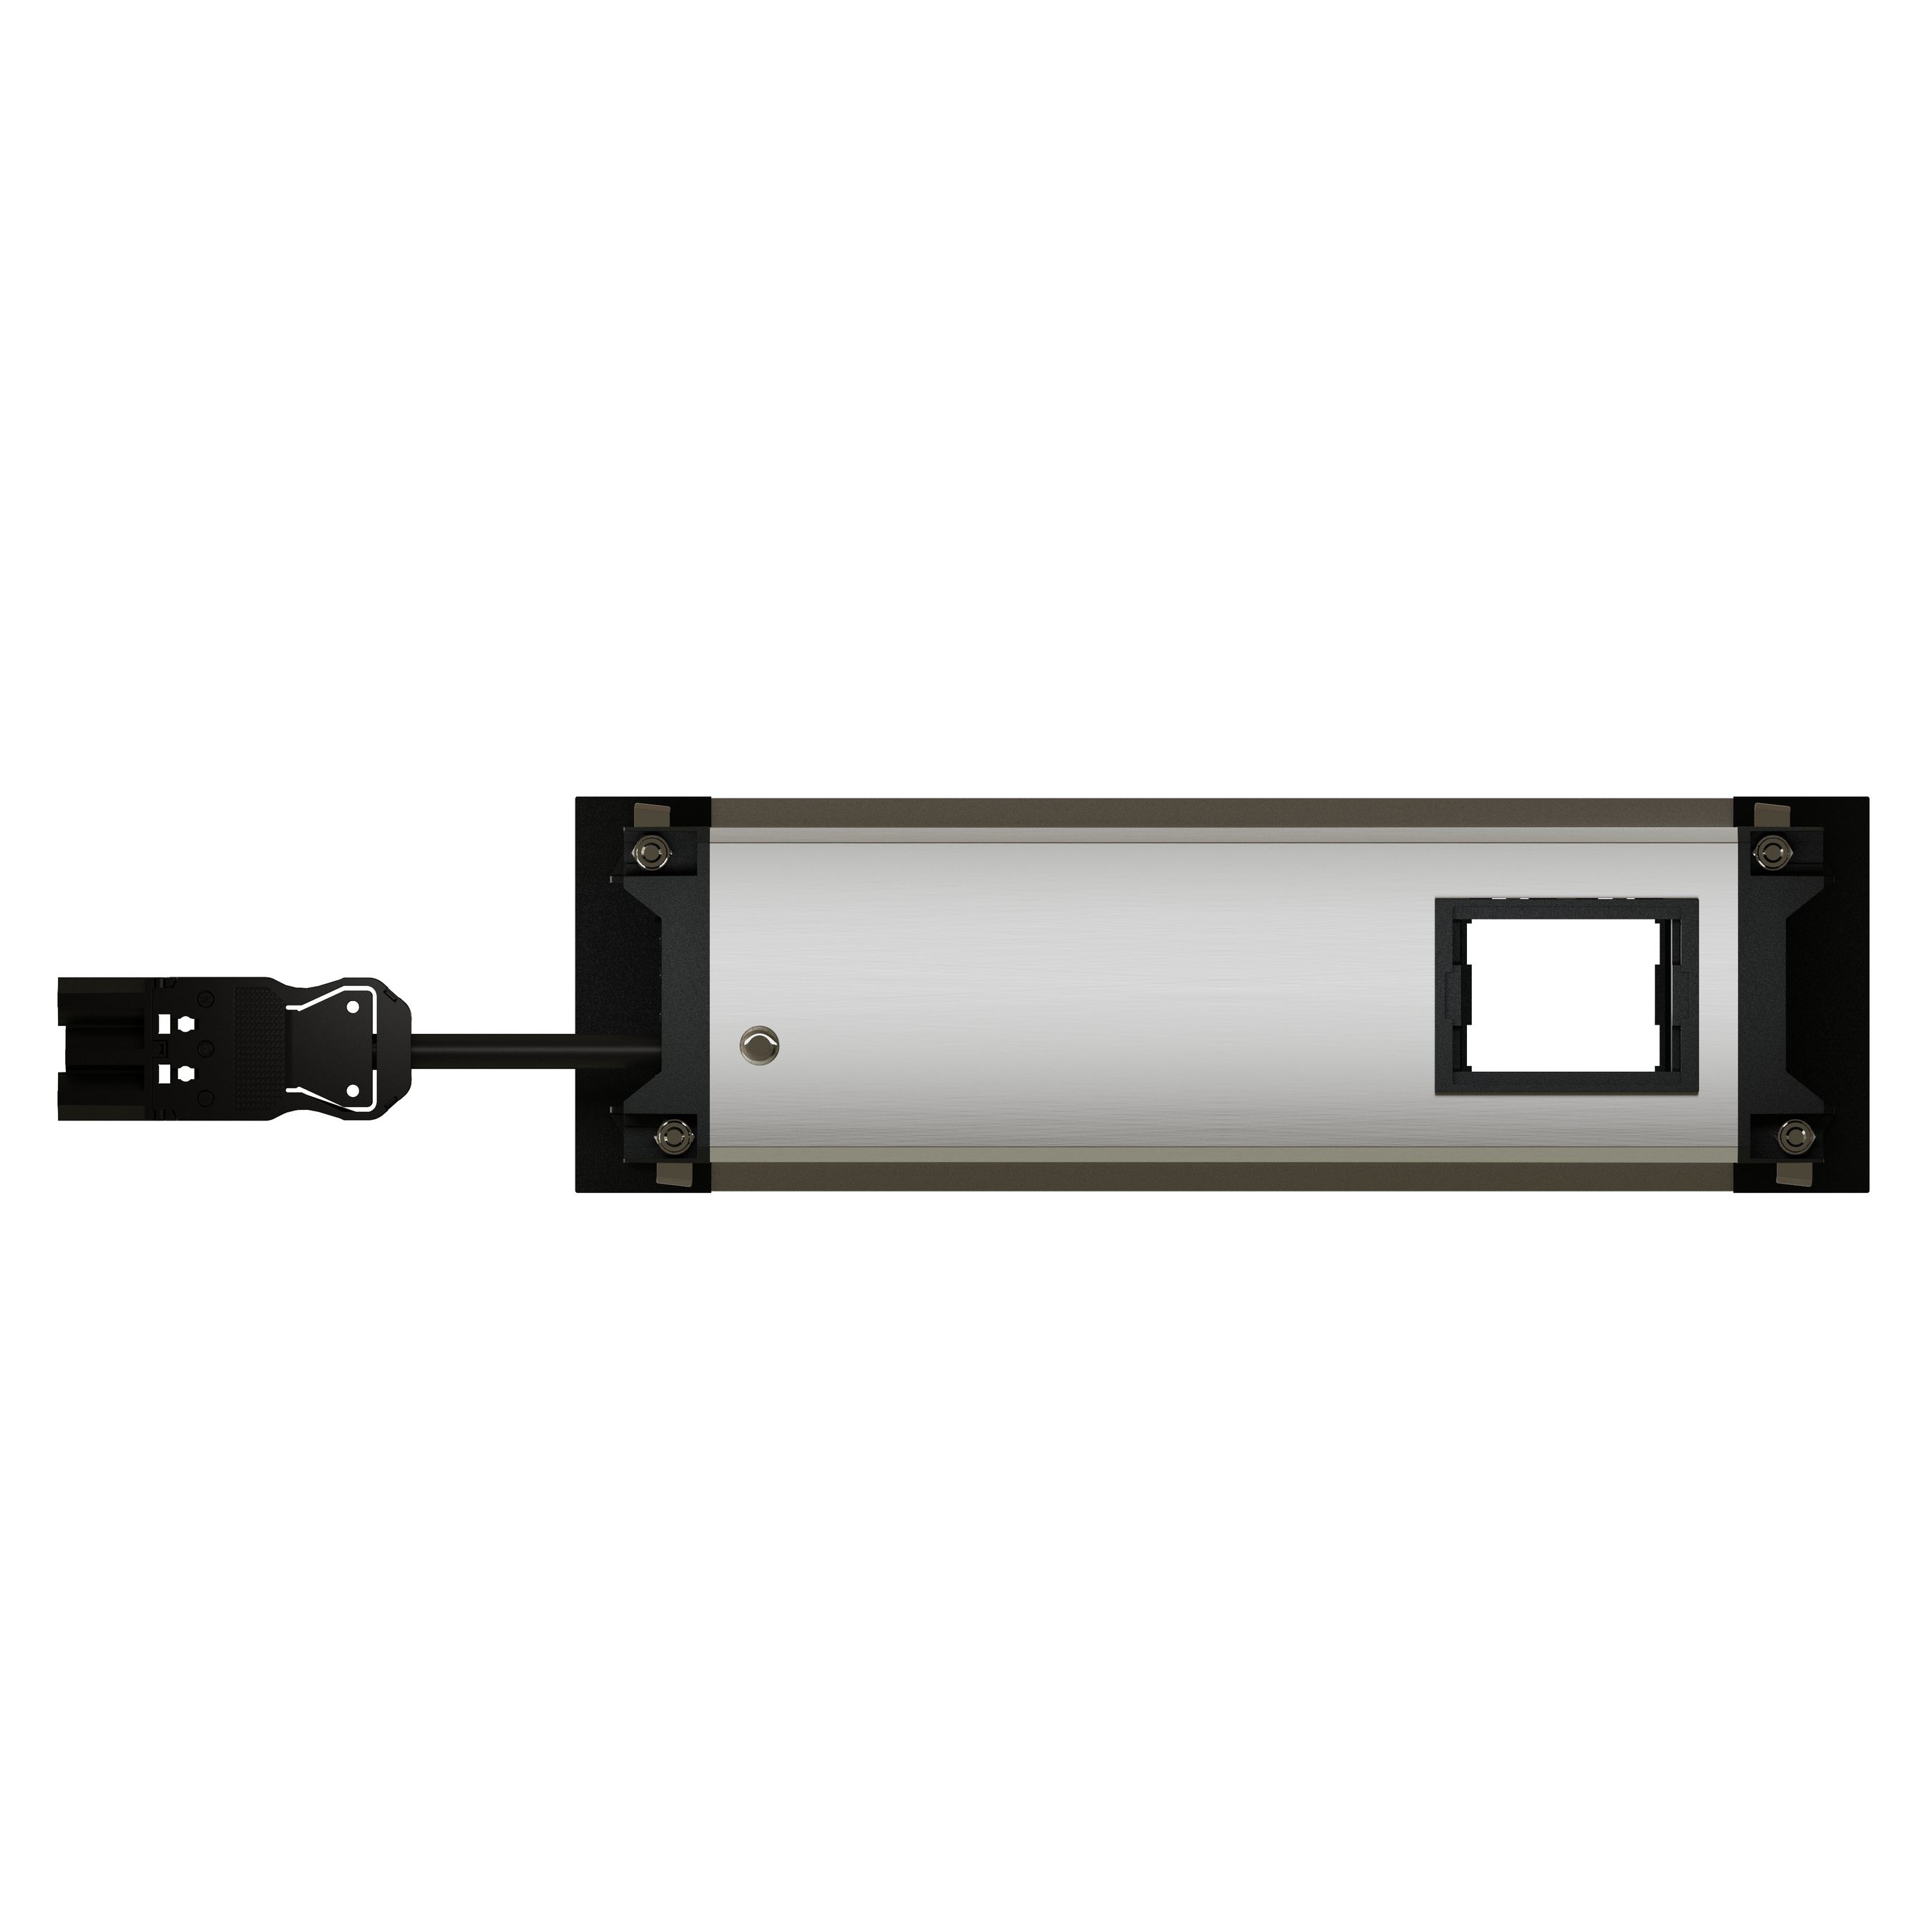 INTRO2.0 - 2 X SOCKET + 1 X USB A/C + 1 X EMPTY MODULE